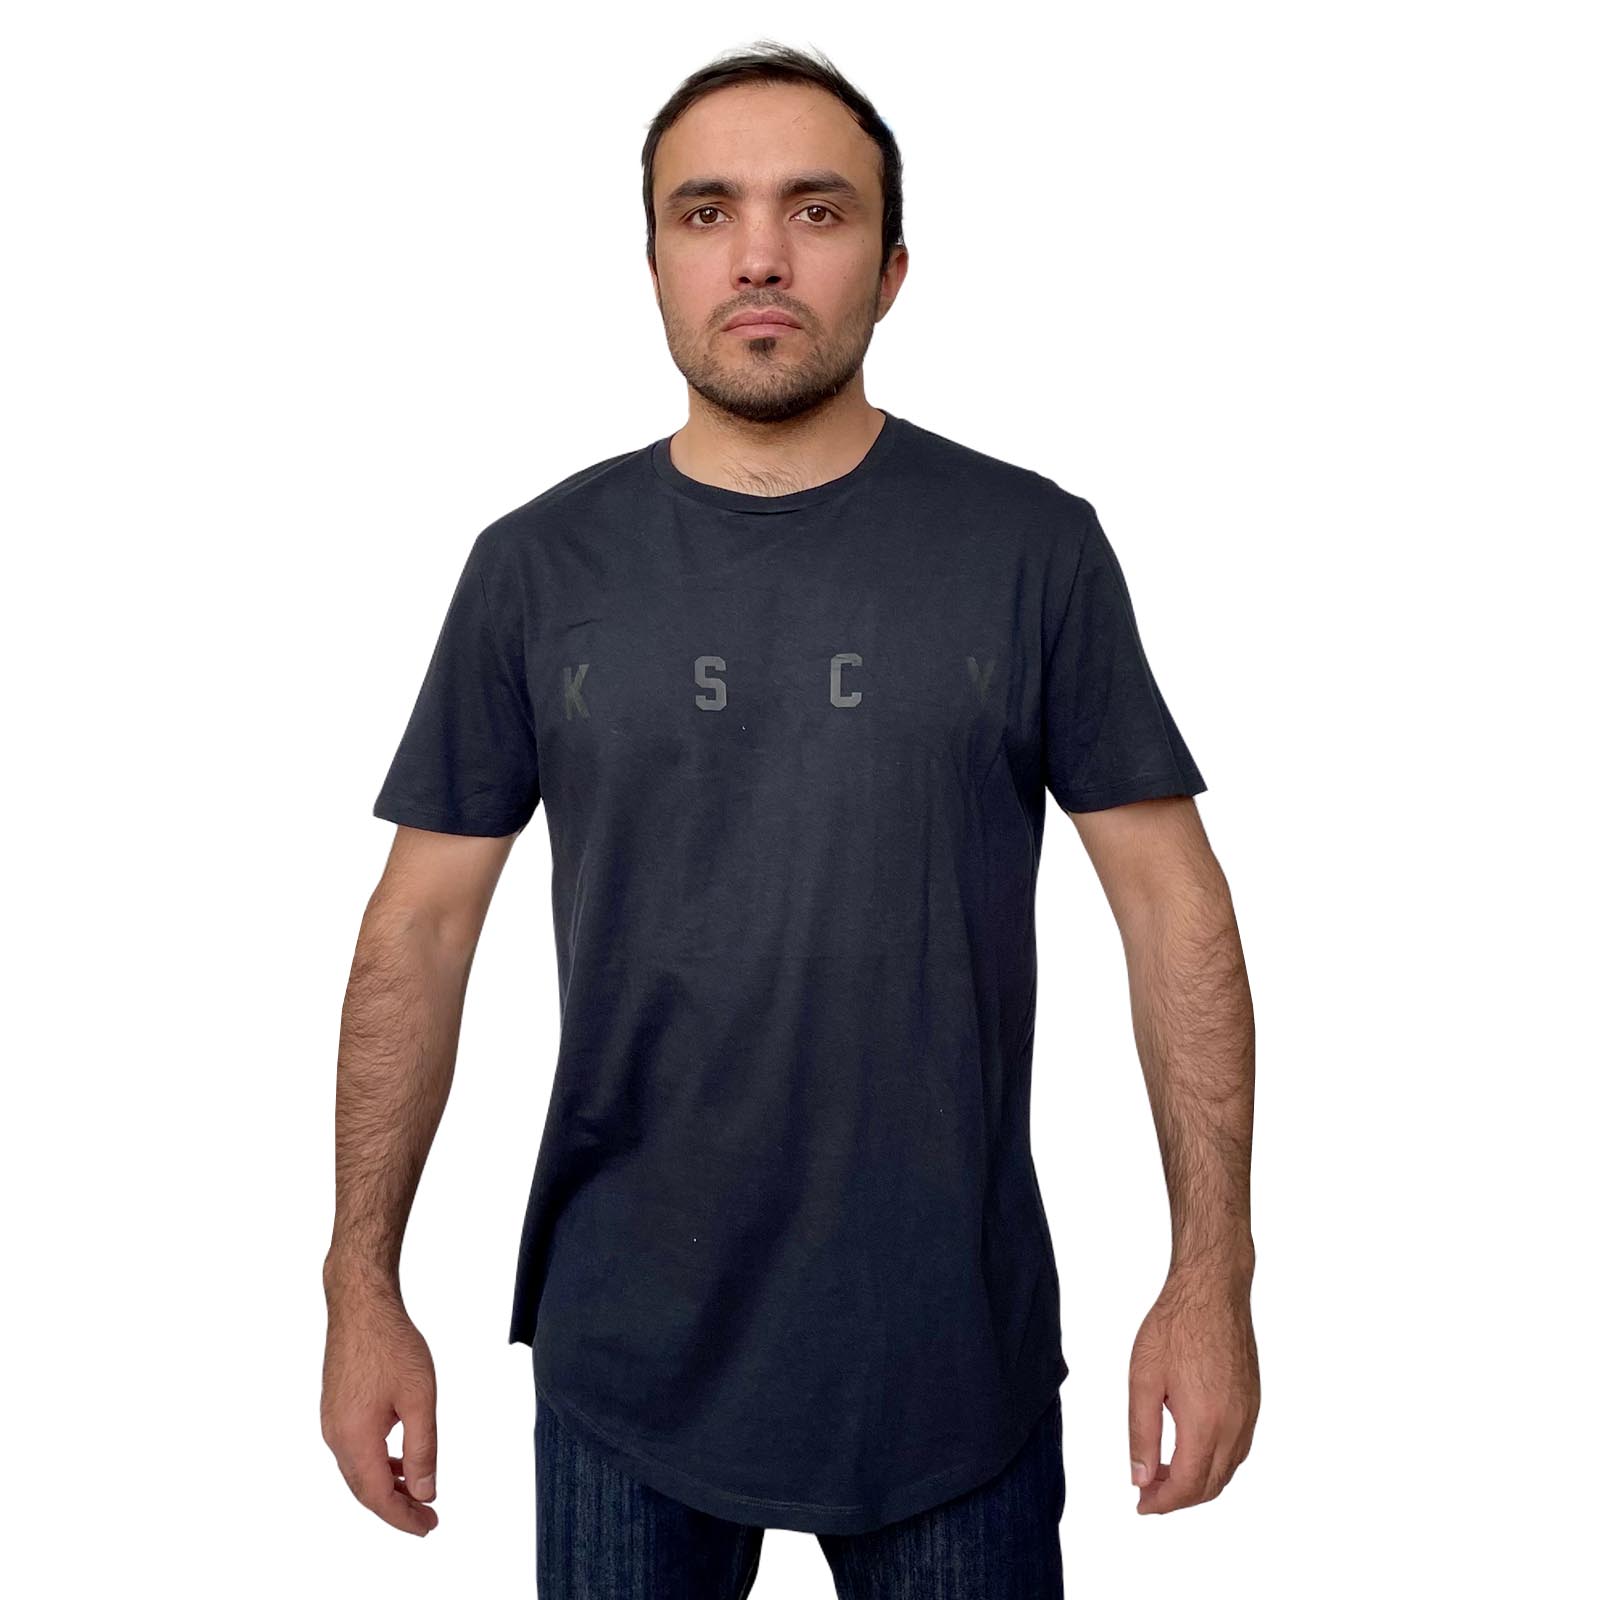 Купить в Москве мужскую футболку KSCY